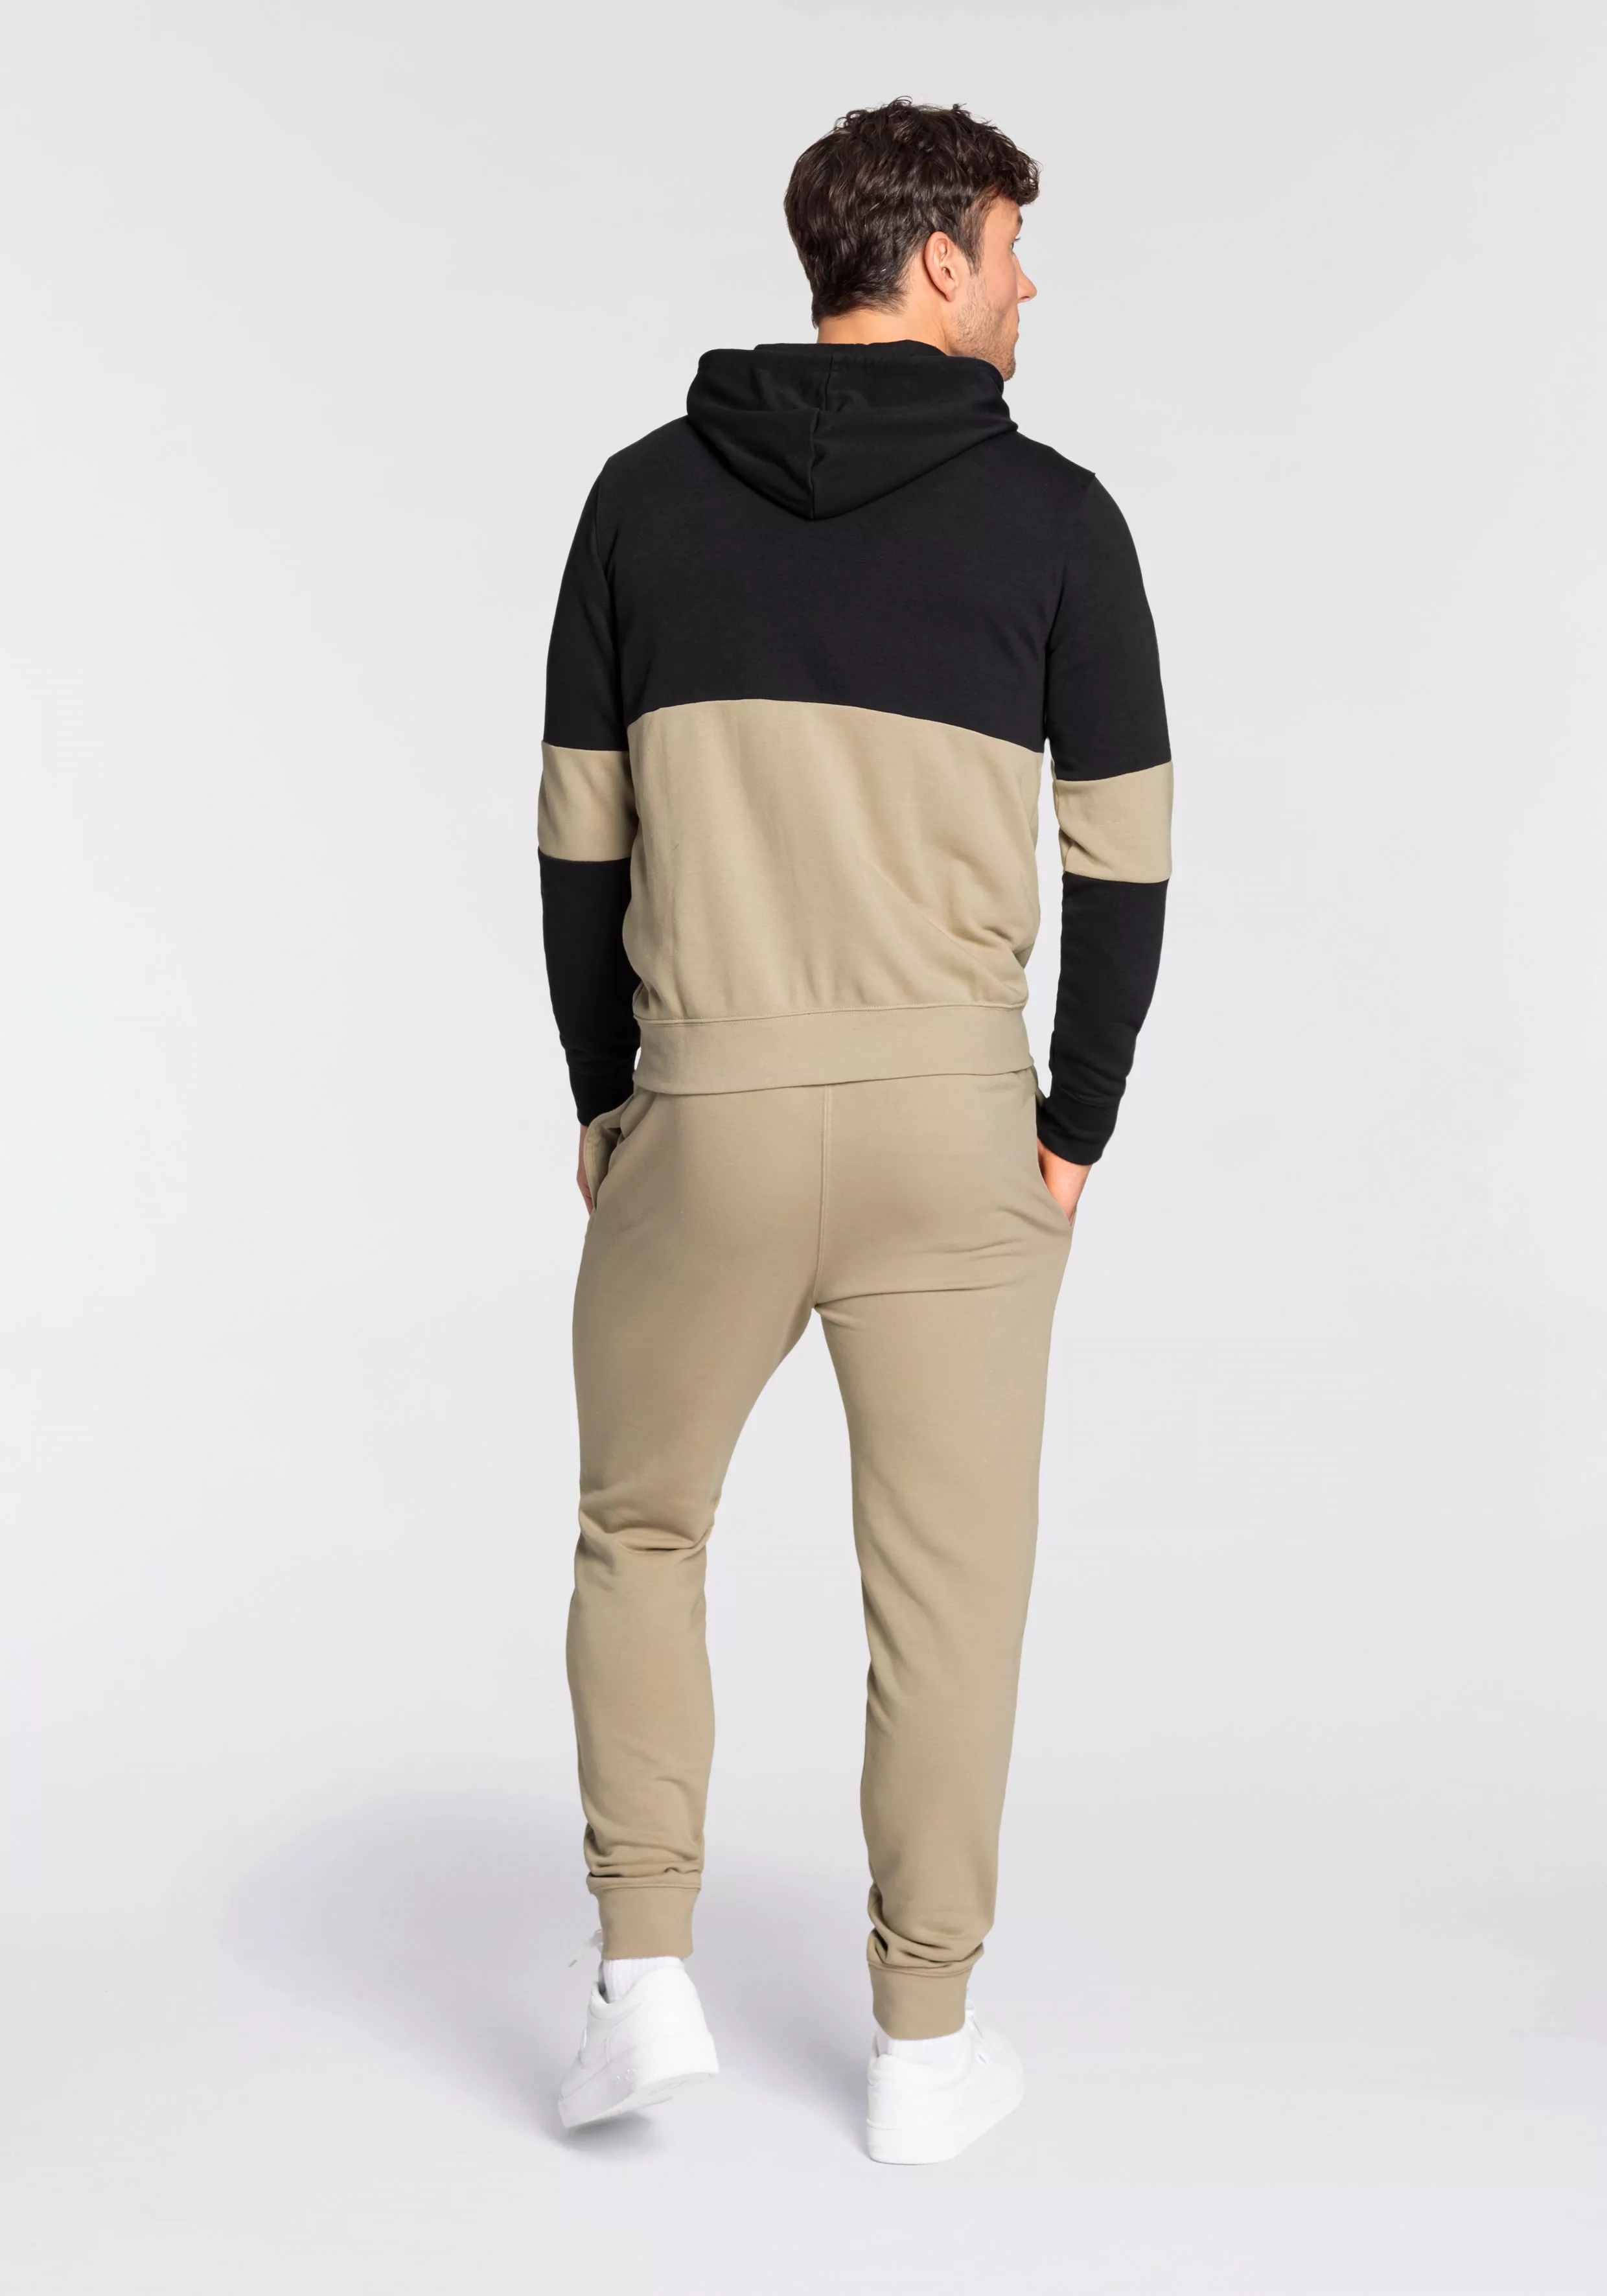 Champion Trainingsanzug "Icons Full Zip Hooded Sweatsuit" günstig online kaufen